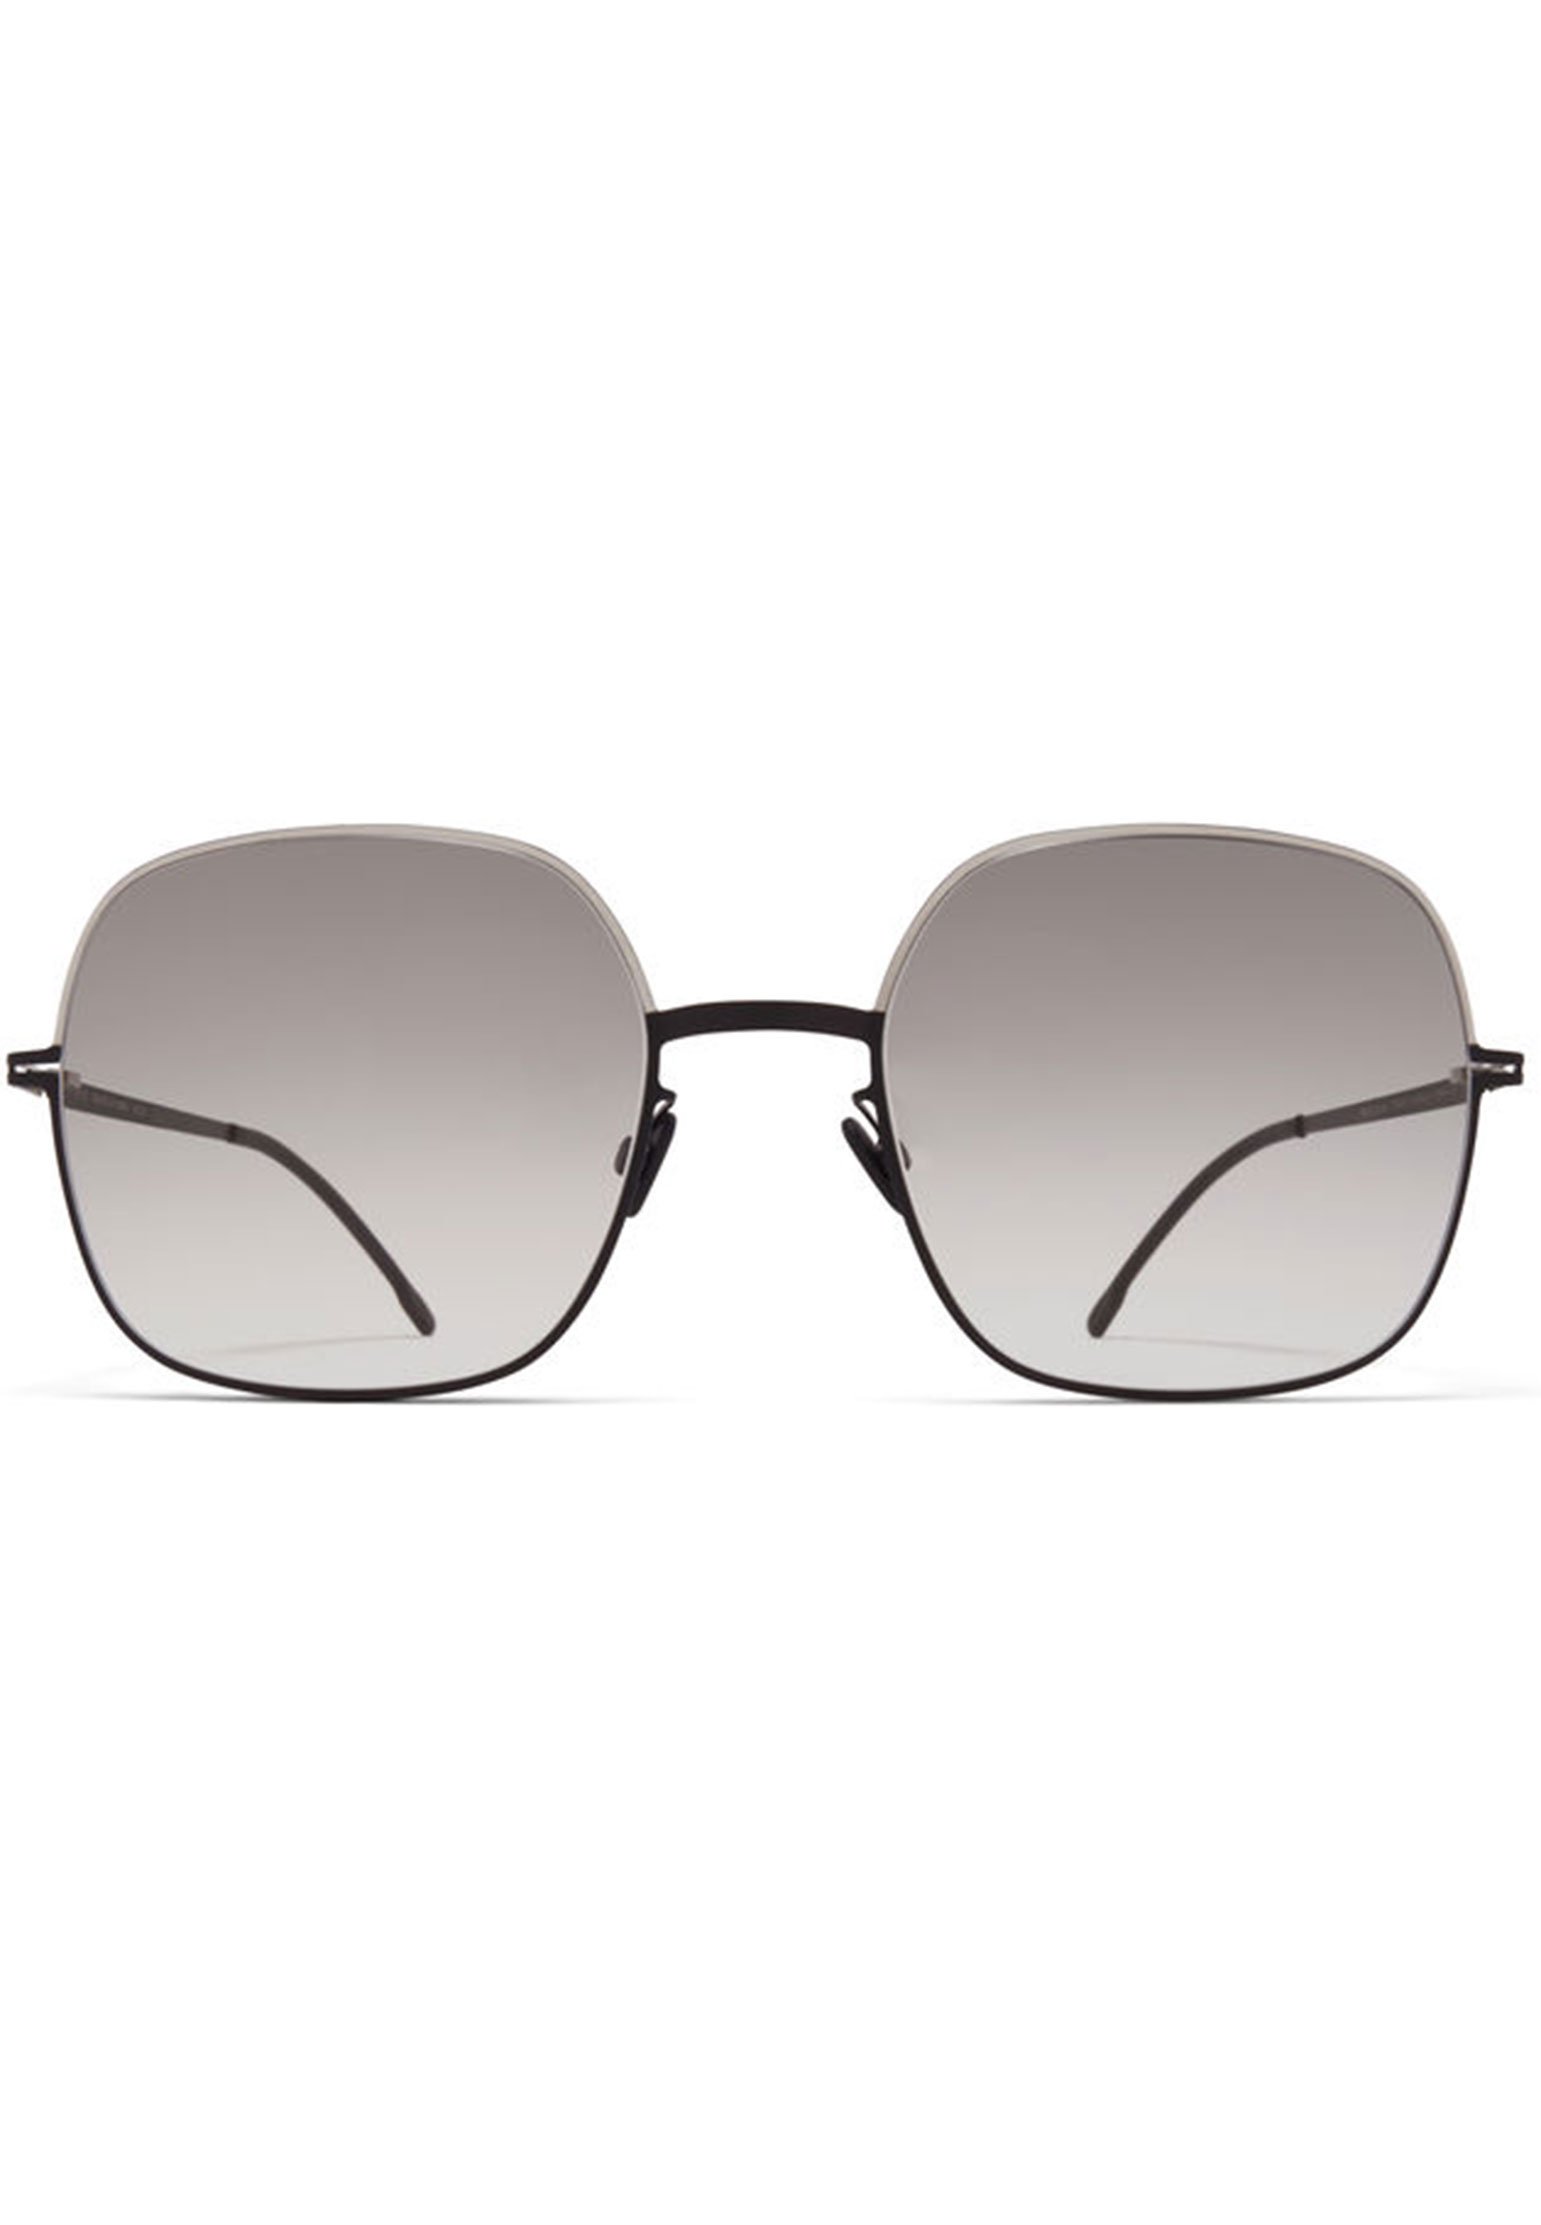 Sunglasses MYKITA Color: black (Code: 224) in online store Allure